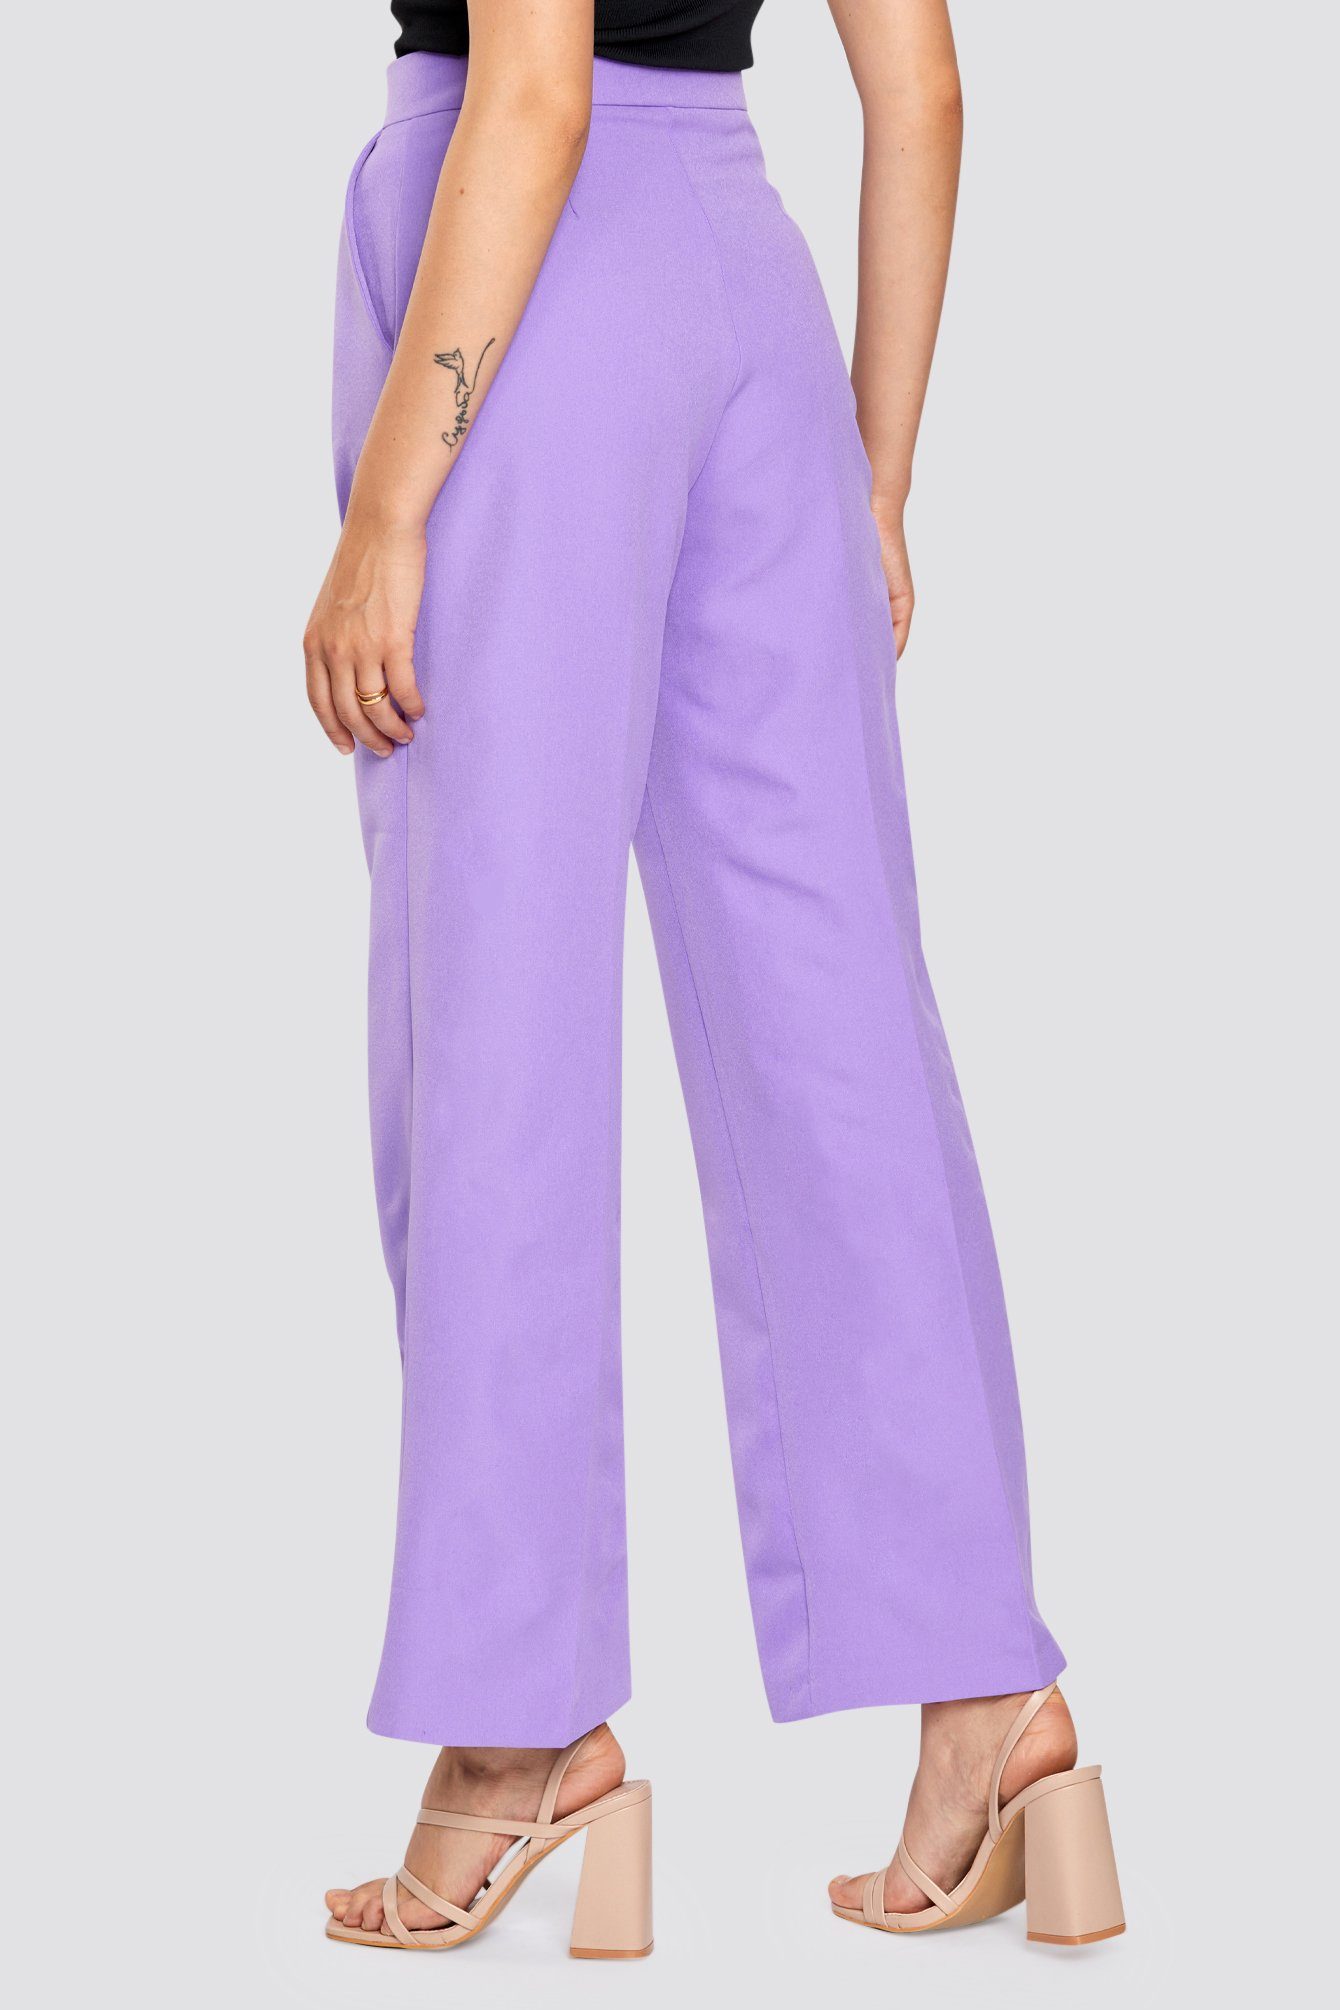 Freshlions Bügelfaltenhose Hose mit hohem Bund lila M